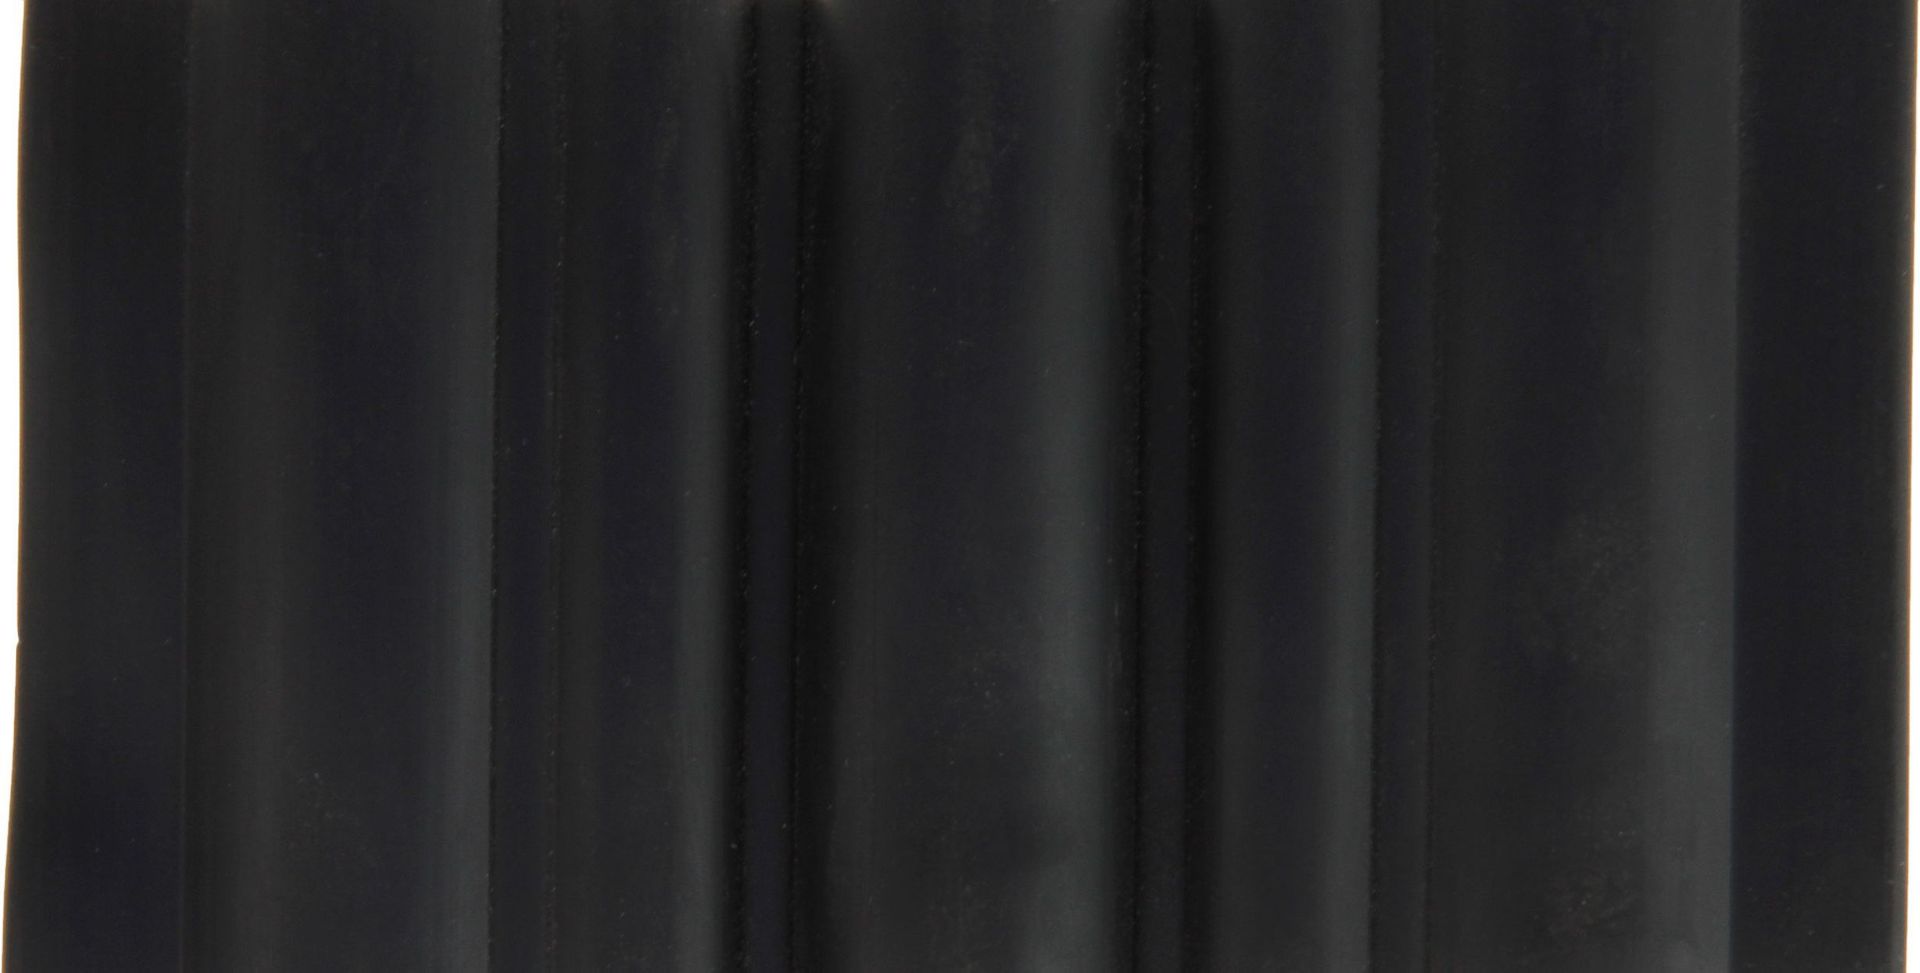 Лента дублирующая, черная, 120 мм SSCL00008603 лента герметизирующая ultima внутренняя 100 мм х 7 м